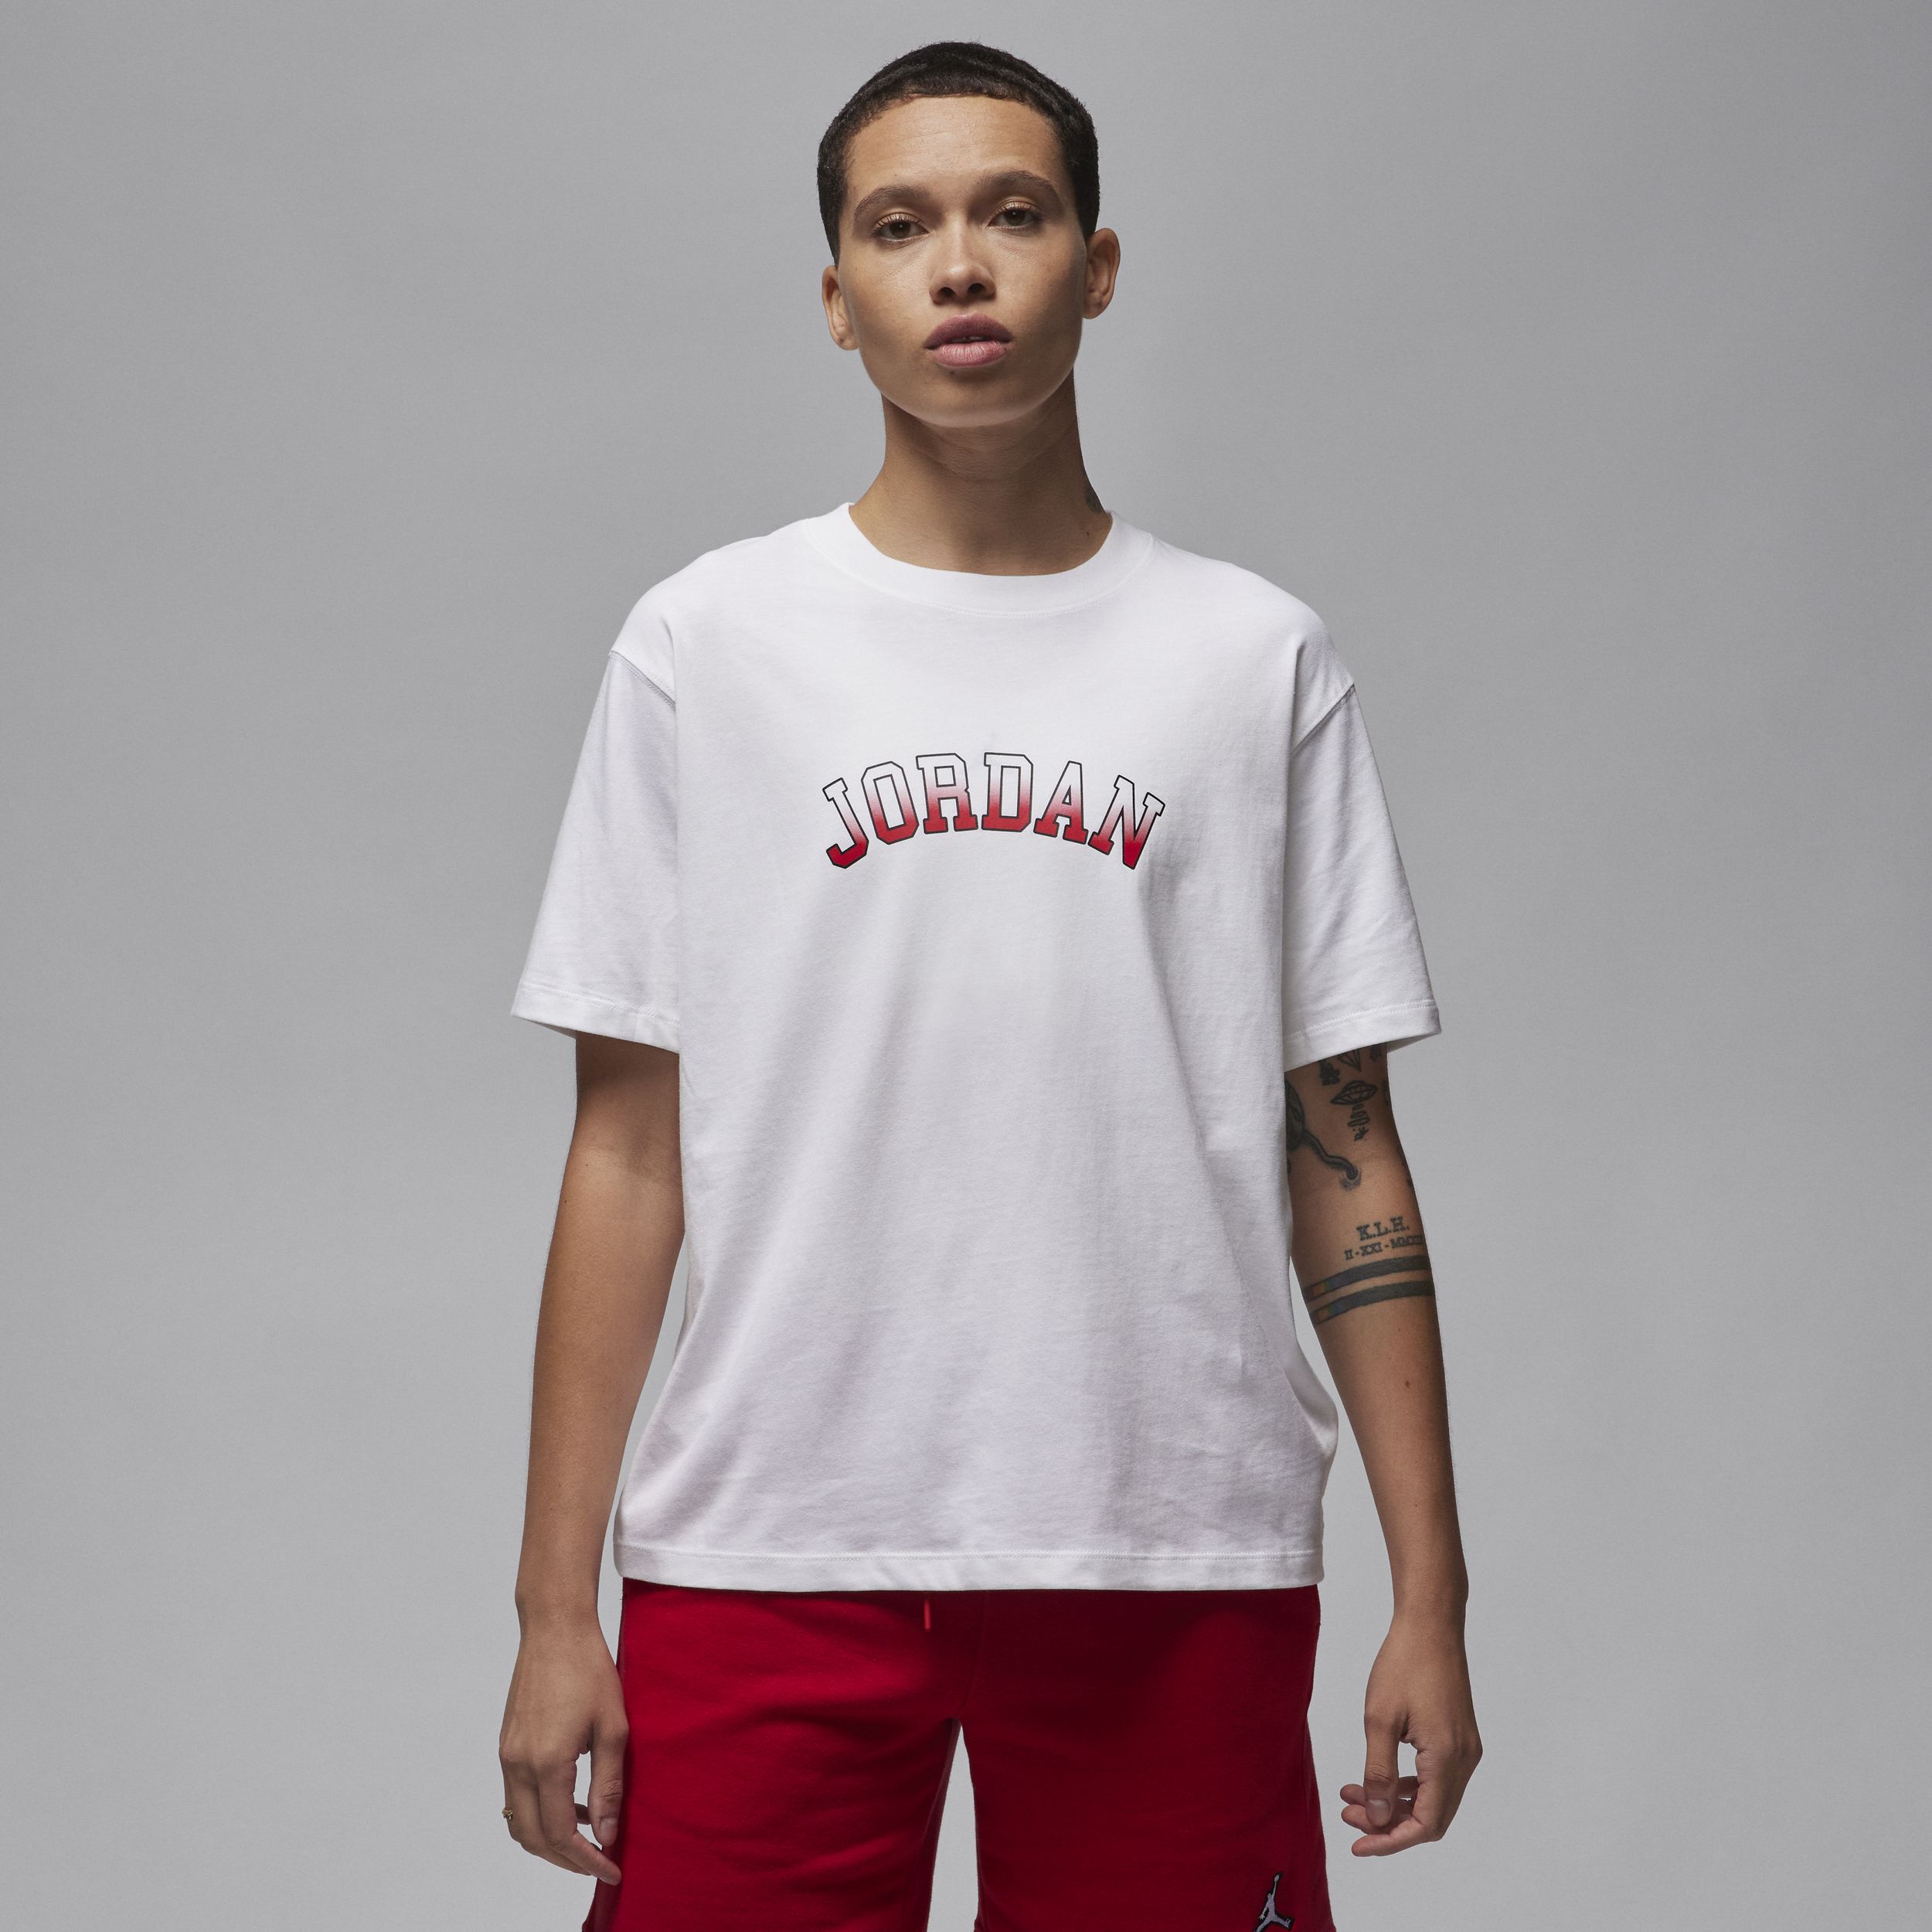 Nike T-shirt con grafica Jordan – Donna - Bianco